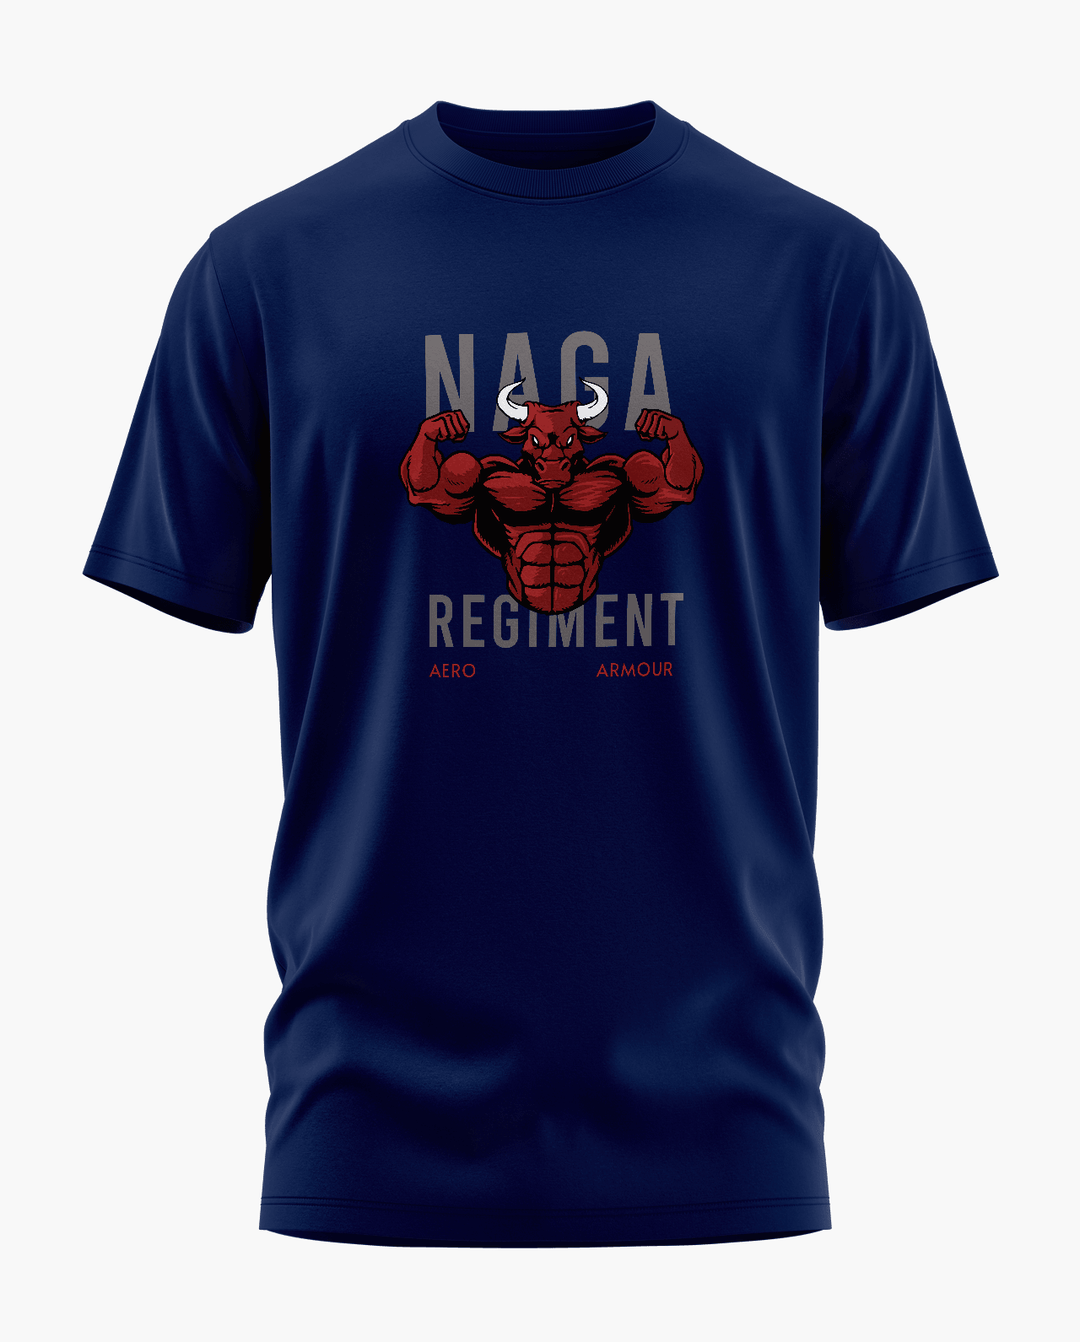 Naga Regiments T-Shirt - Aero Armour